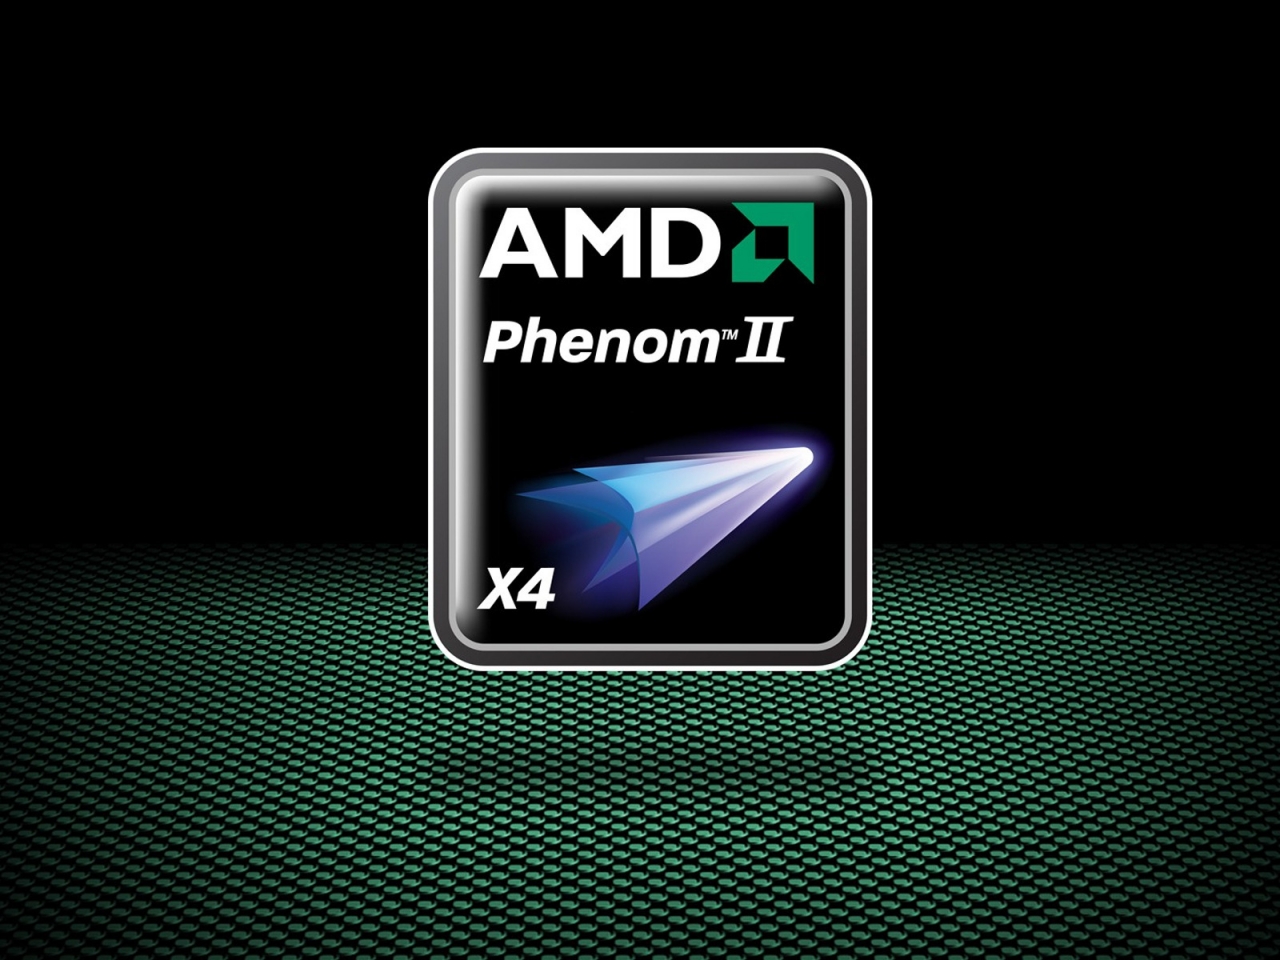 AMD Phenom II for 1280 x 960 resolution